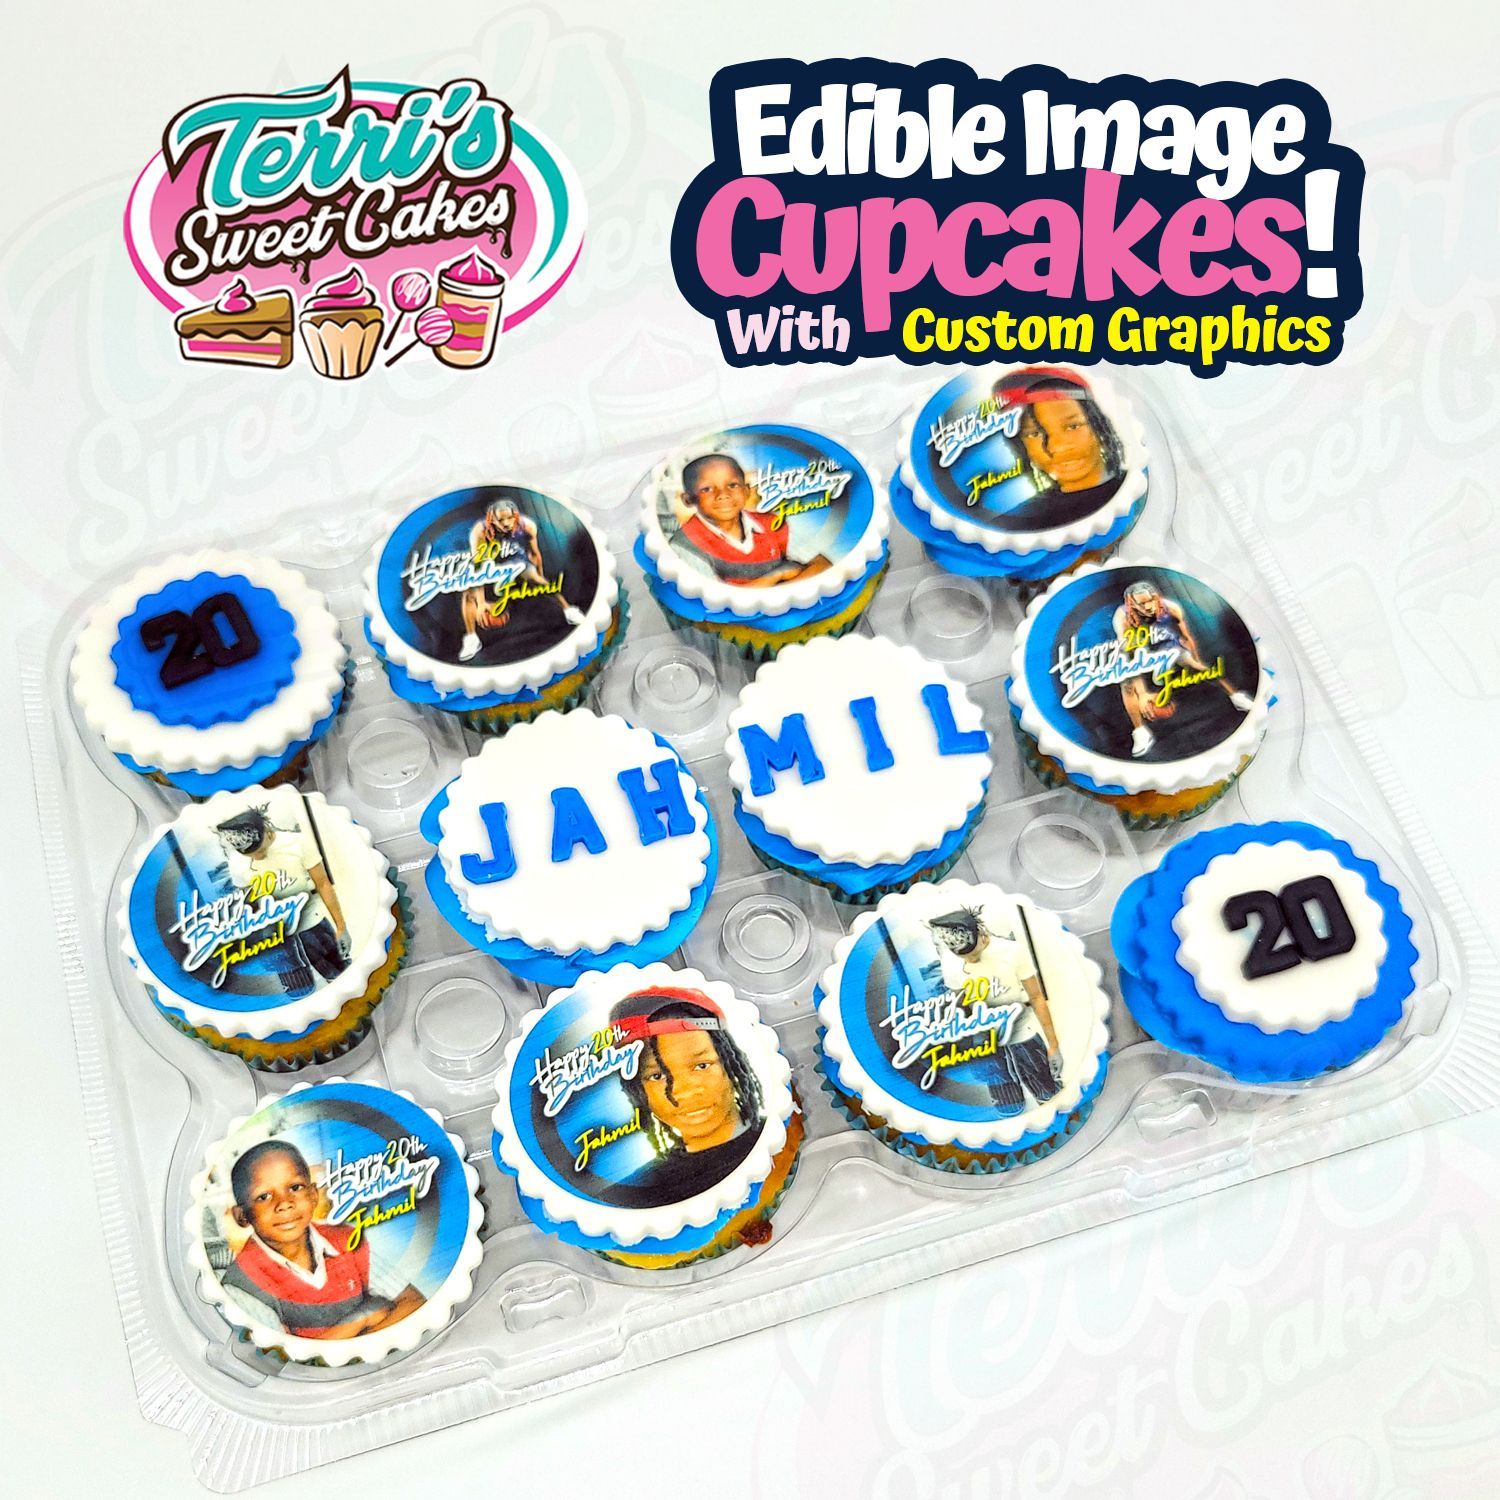 Custom Edible Image Cupcakes by Terri's Sweet Cakes!